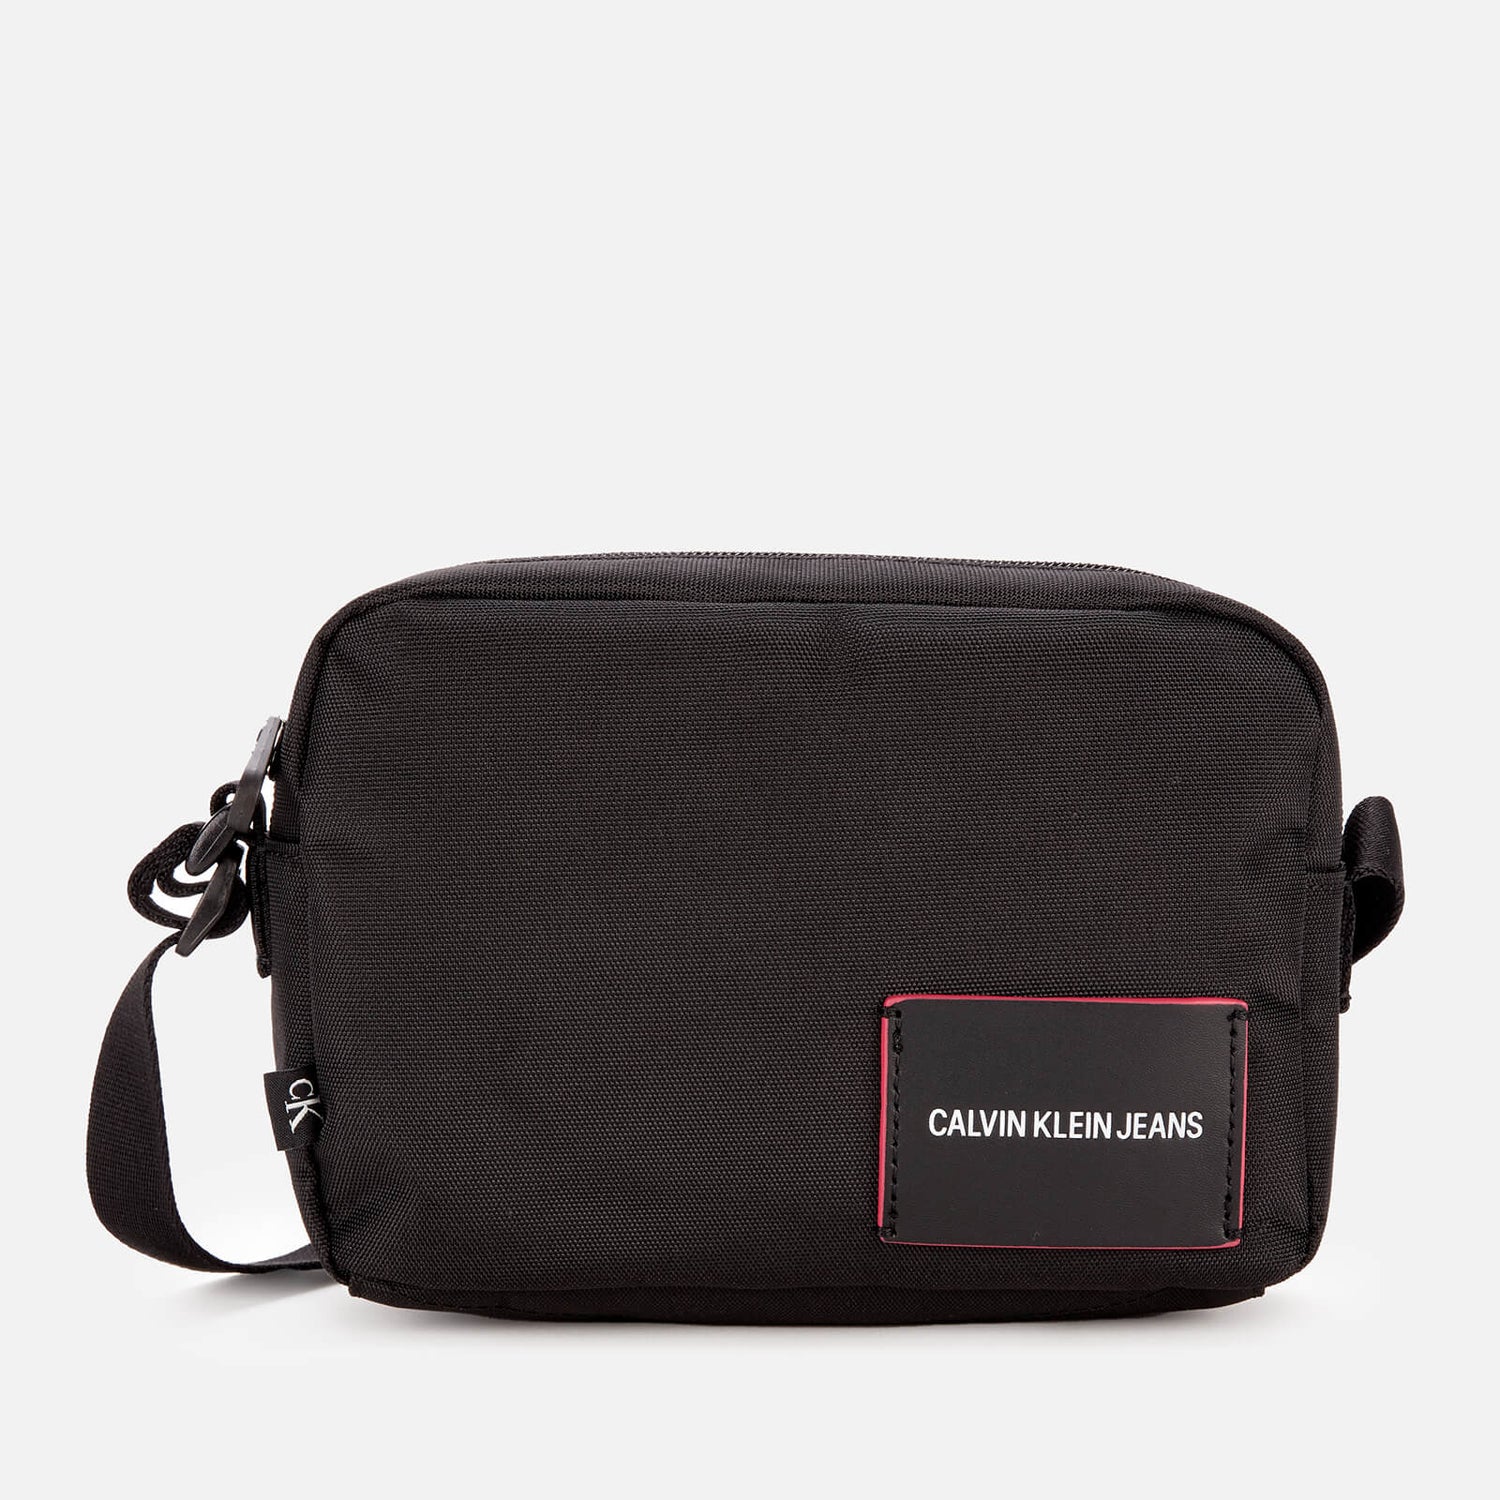 Calvin Klein Jeans Women's Camera Bag - Black